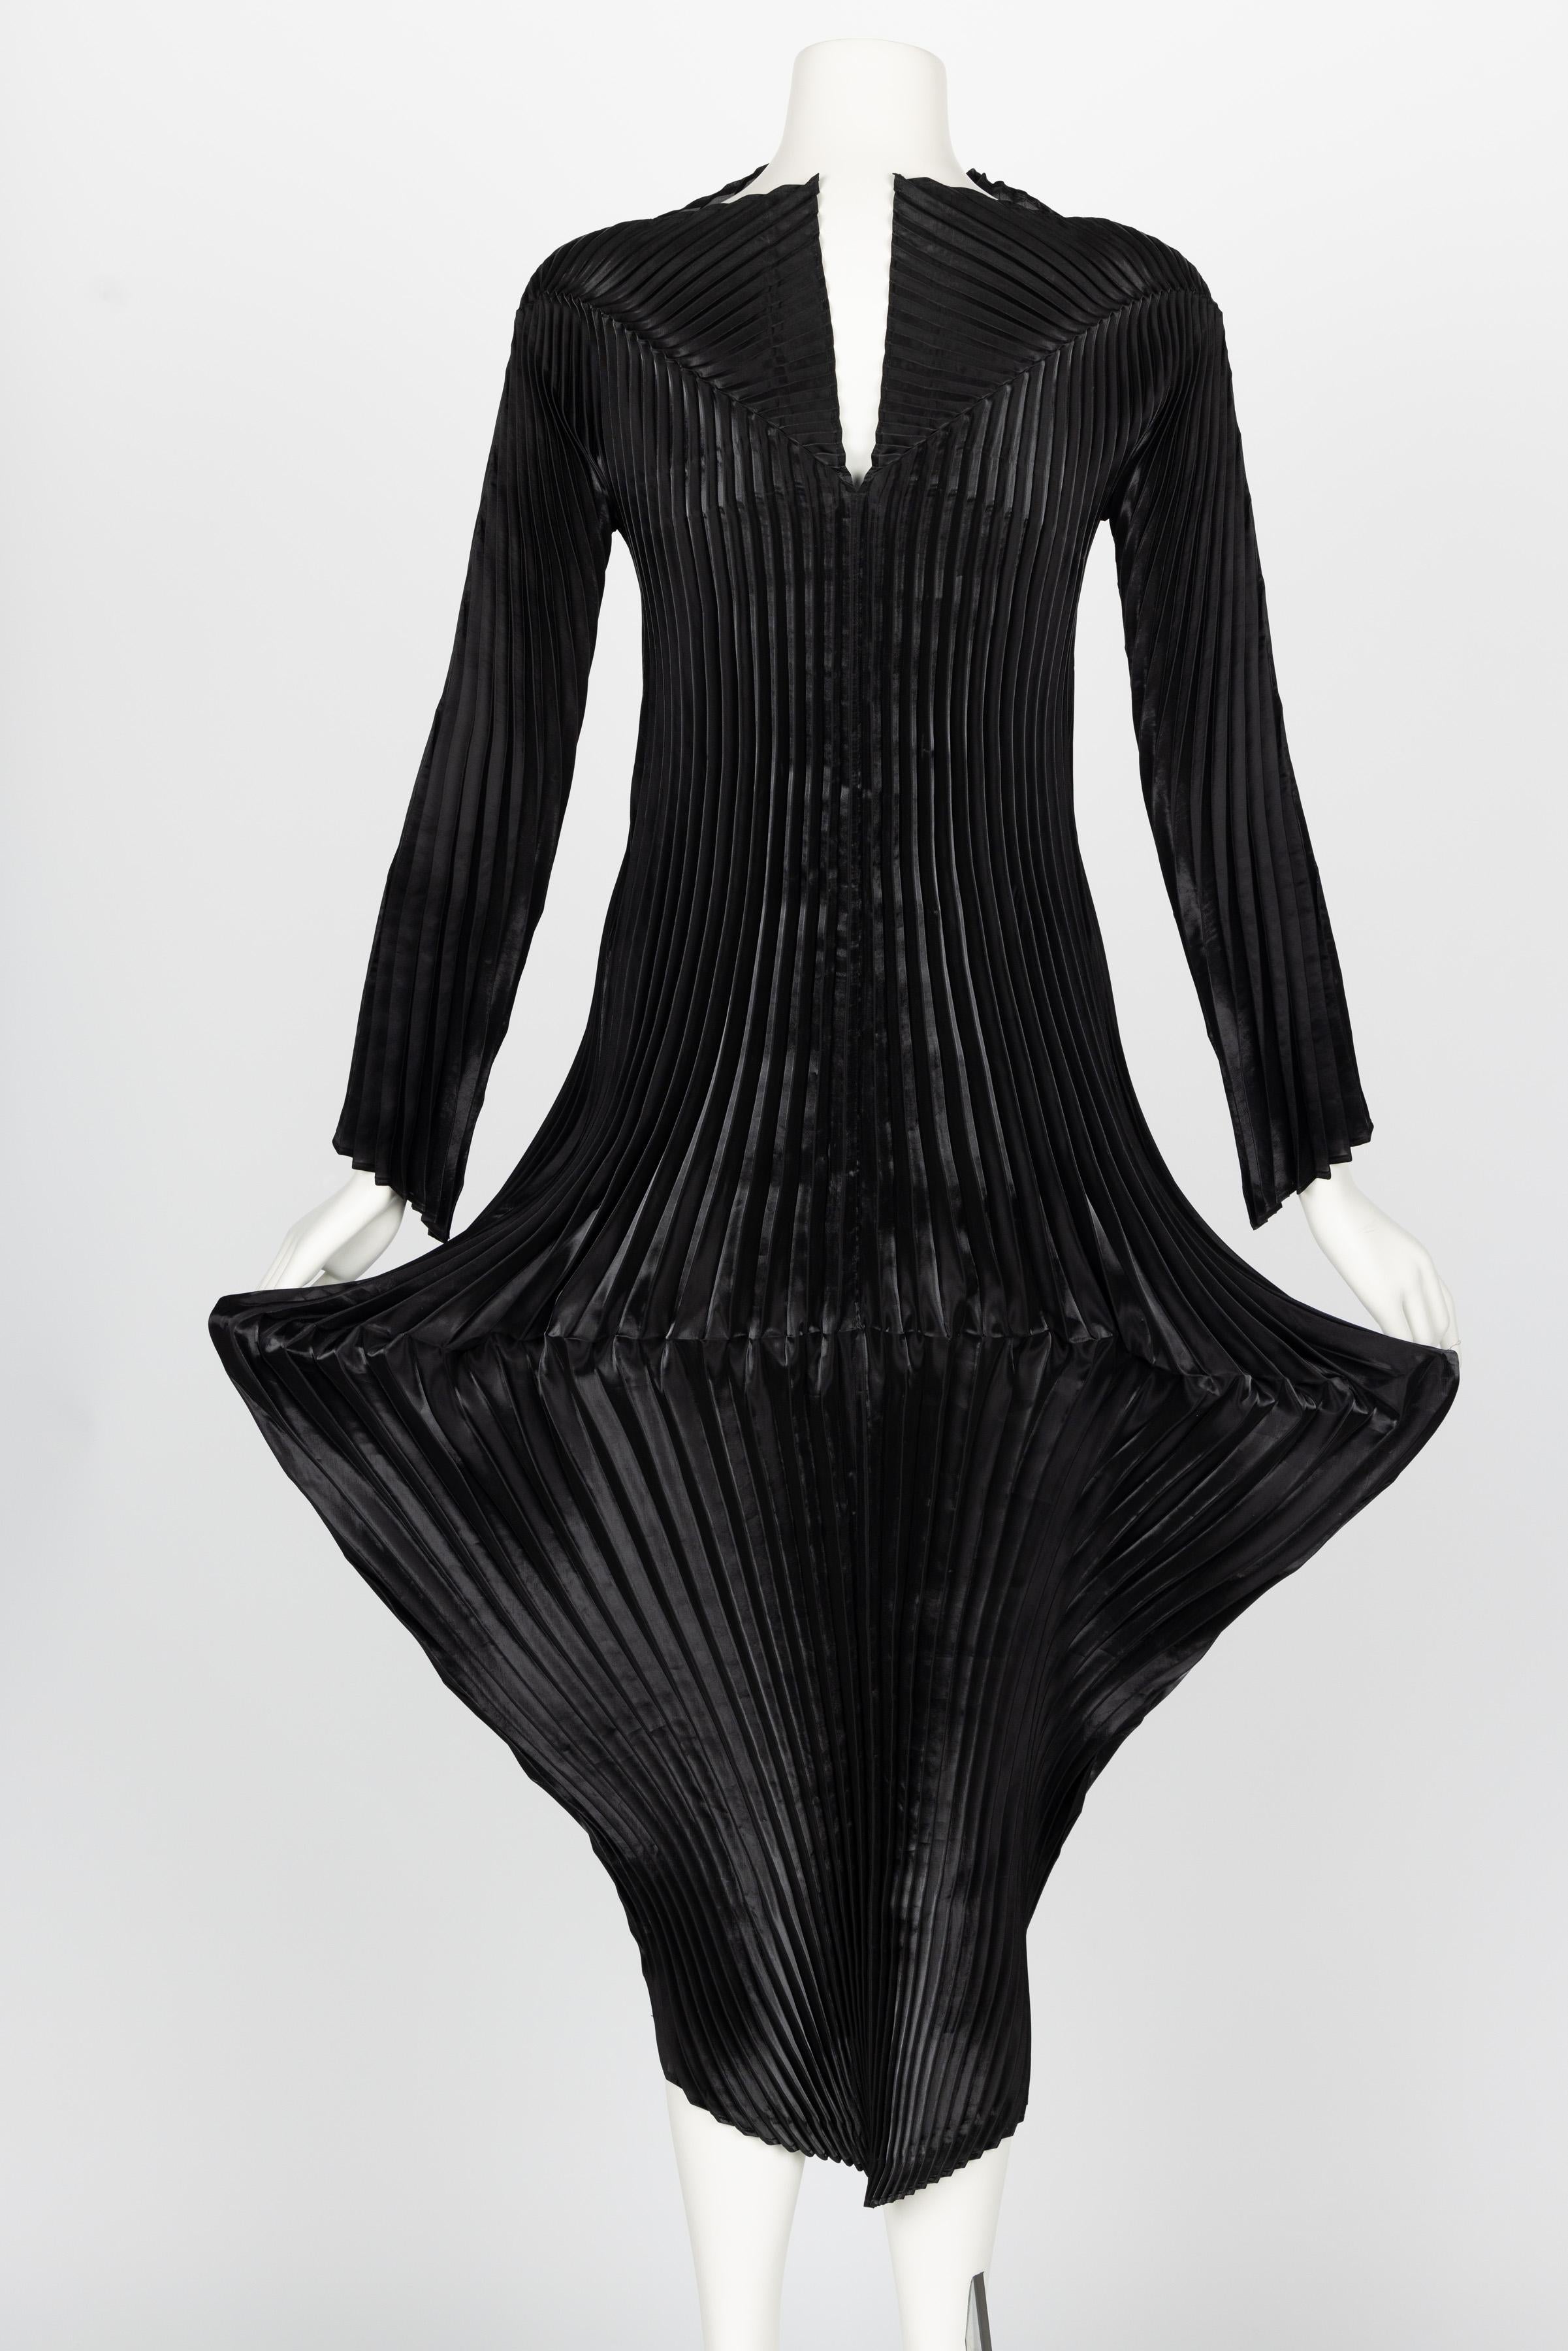 Collectors Issey Miyake Fall 1999 Documented Metallic Black Dress 2